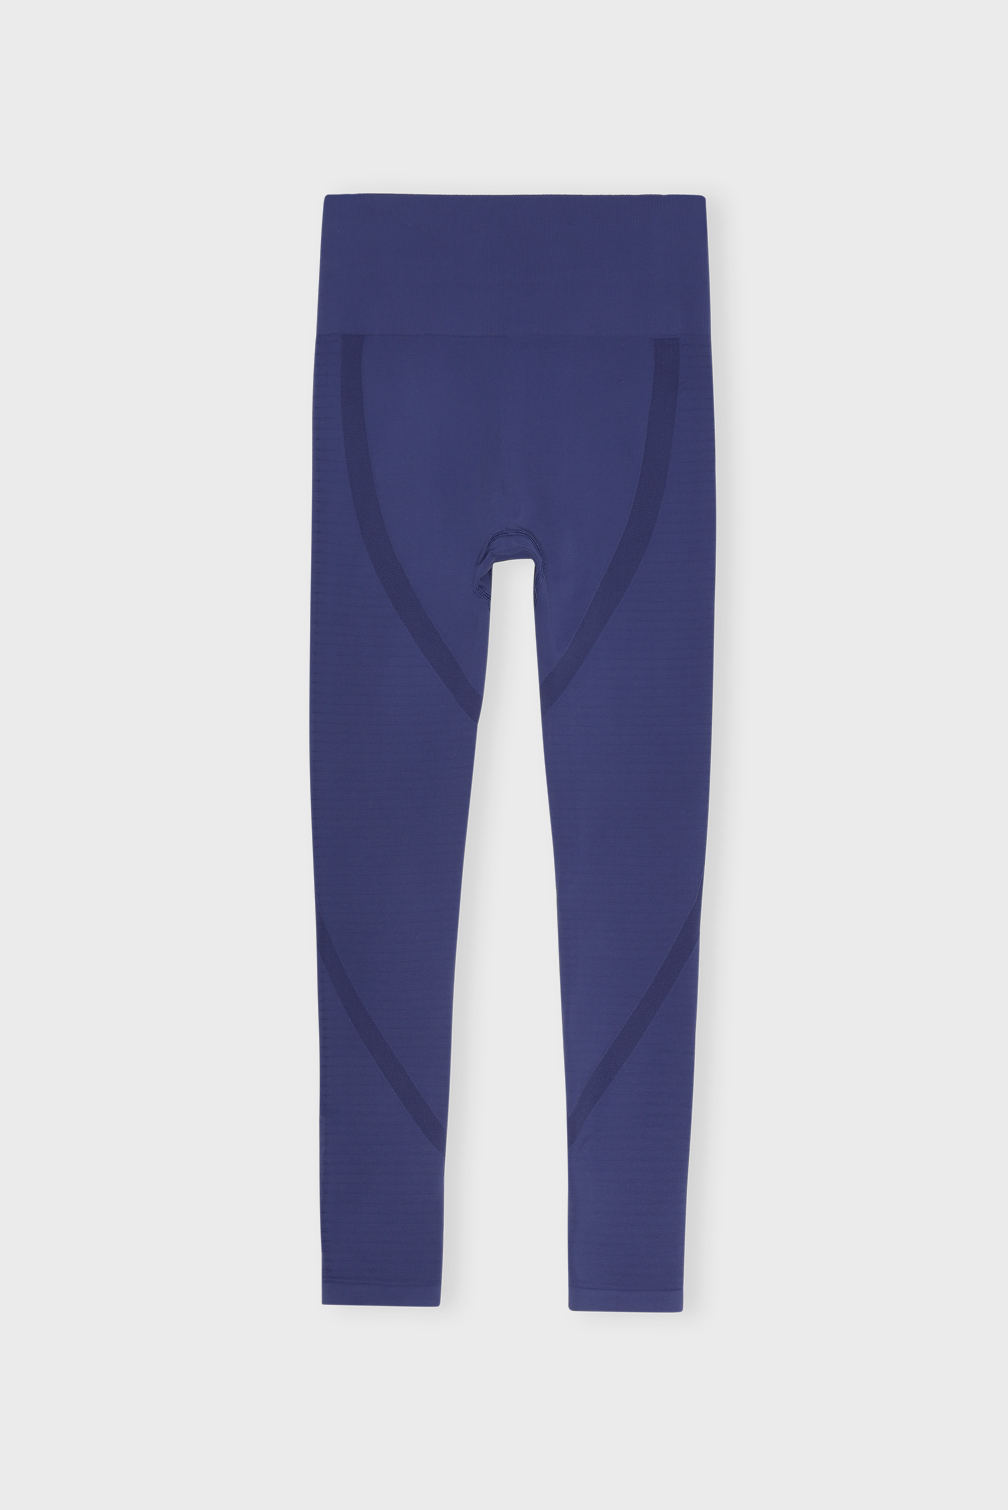 10525 one pants mesh blue